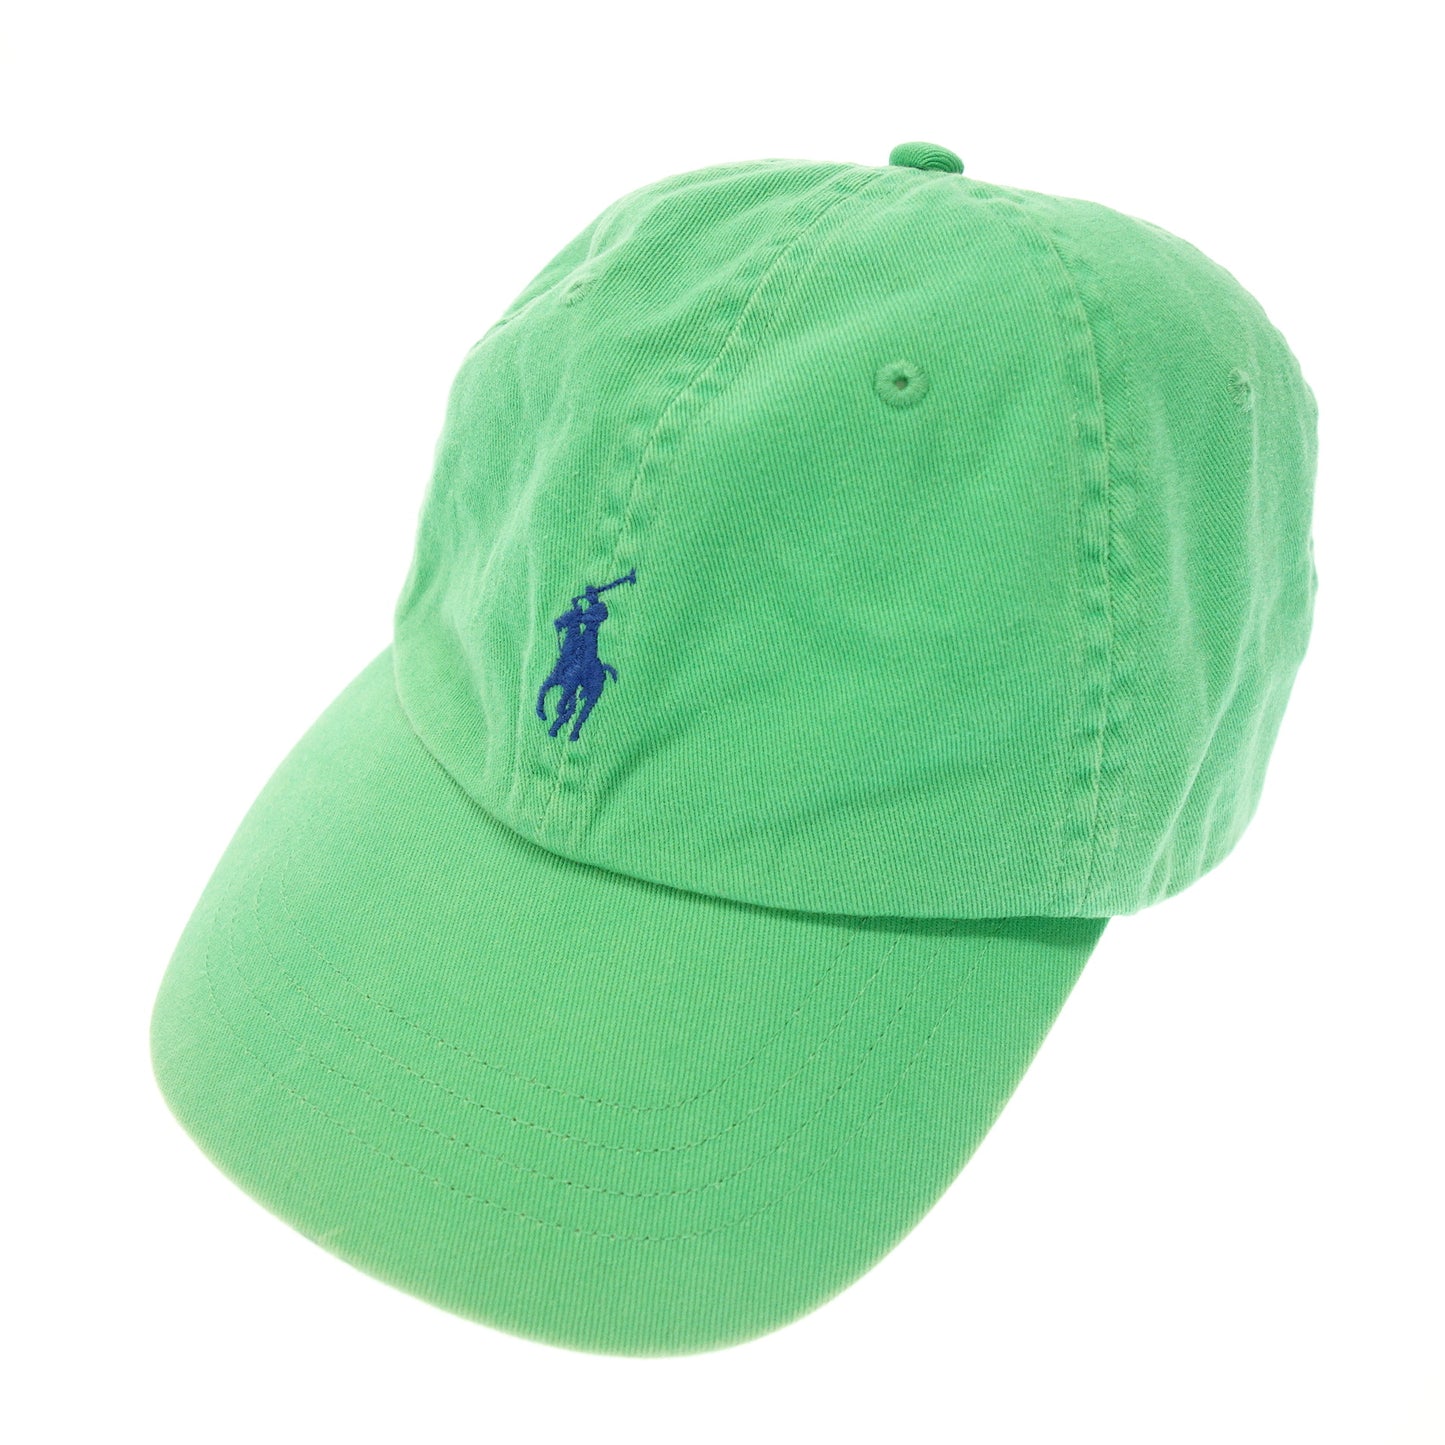 Used ◆ Polo Ralph Lauren cap hat pony logo 3-piece set POLO RALPH LAUREN [AFI20] 